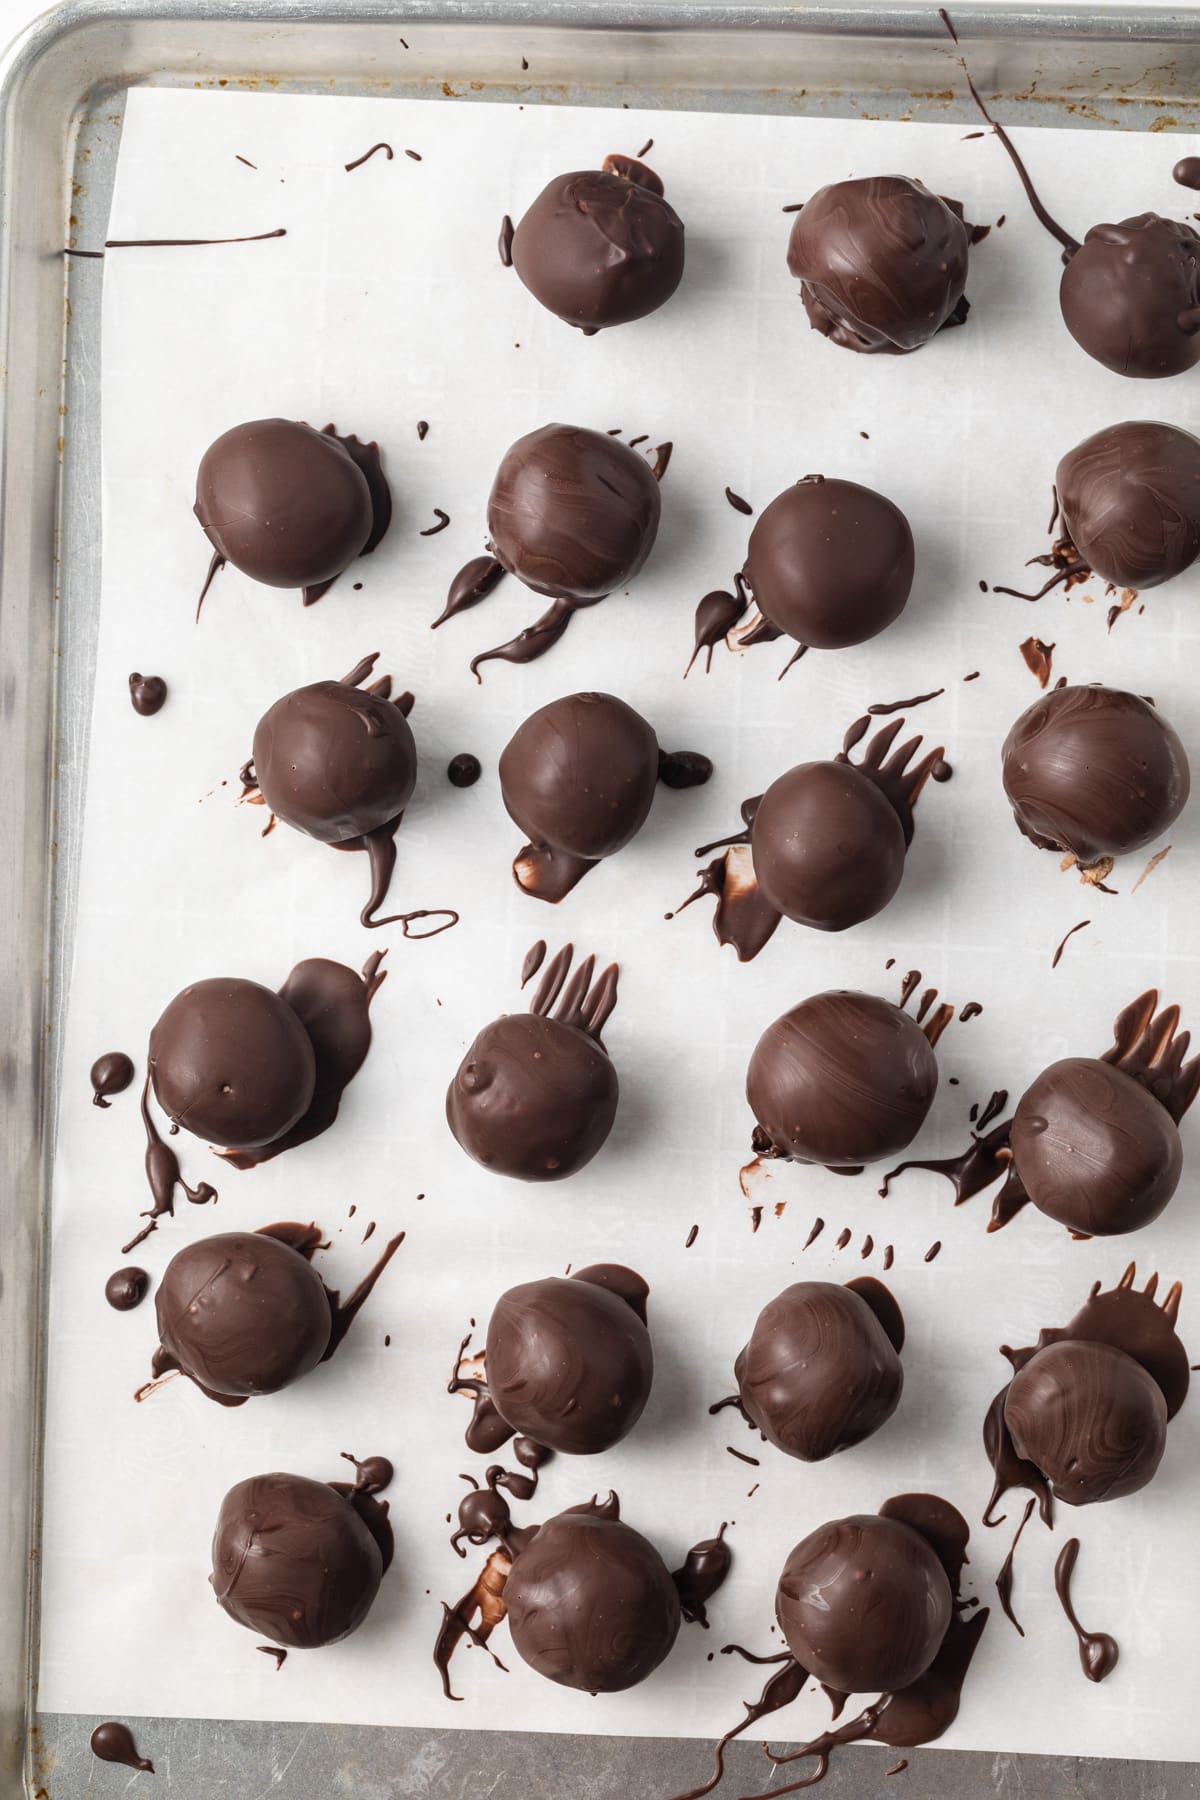 Chocolate coated peanut butter balls on baking sheet.